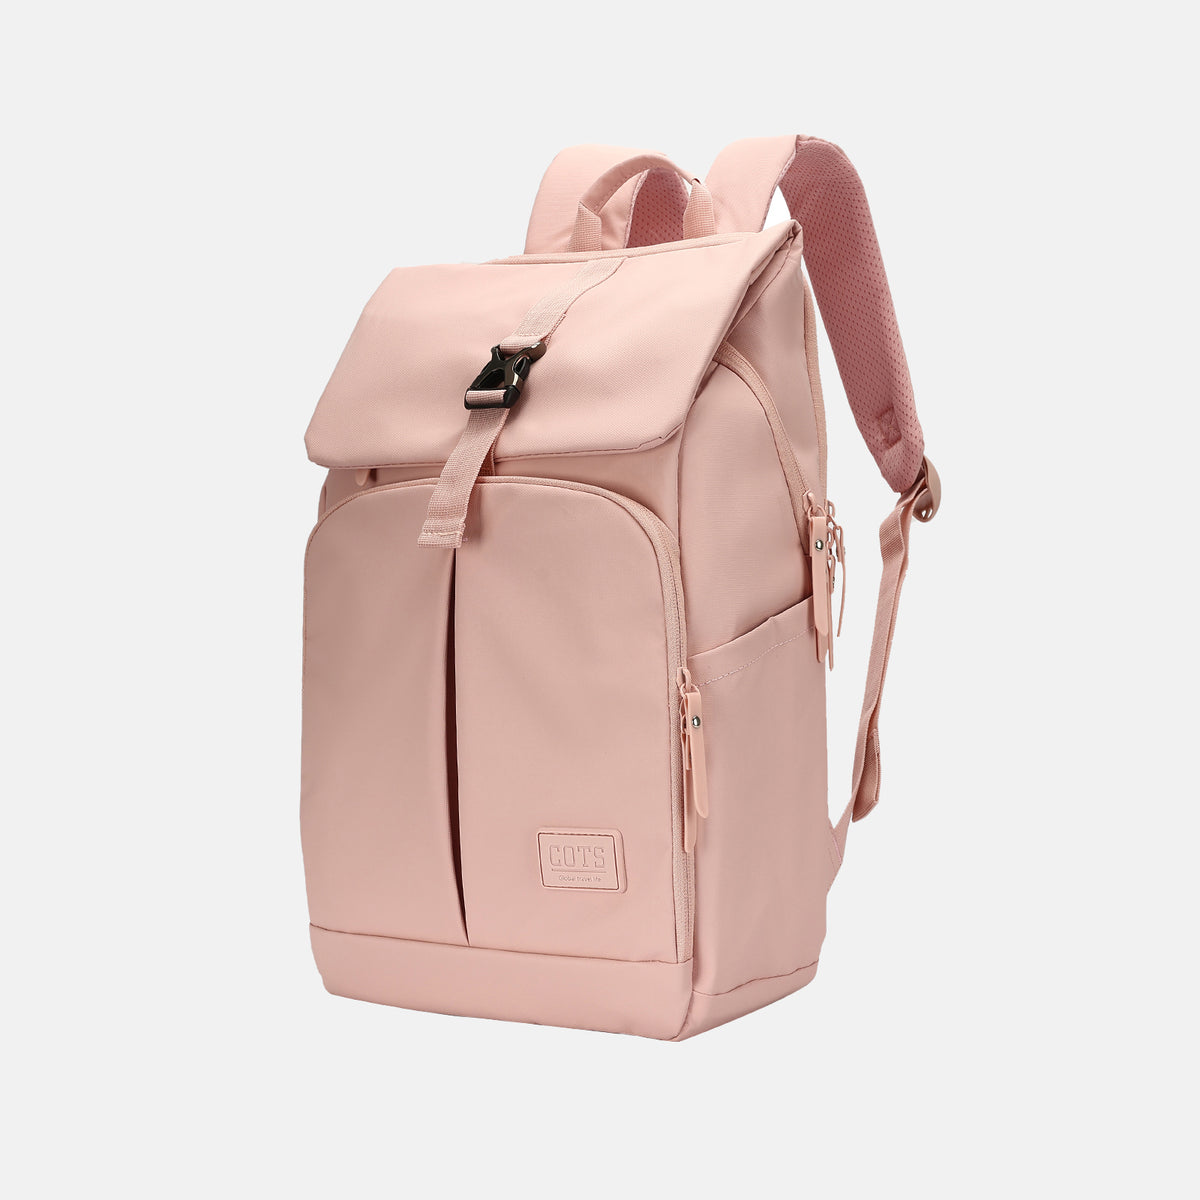 URBAN-LINK Minimalist Snap-Flat Daily Backpack